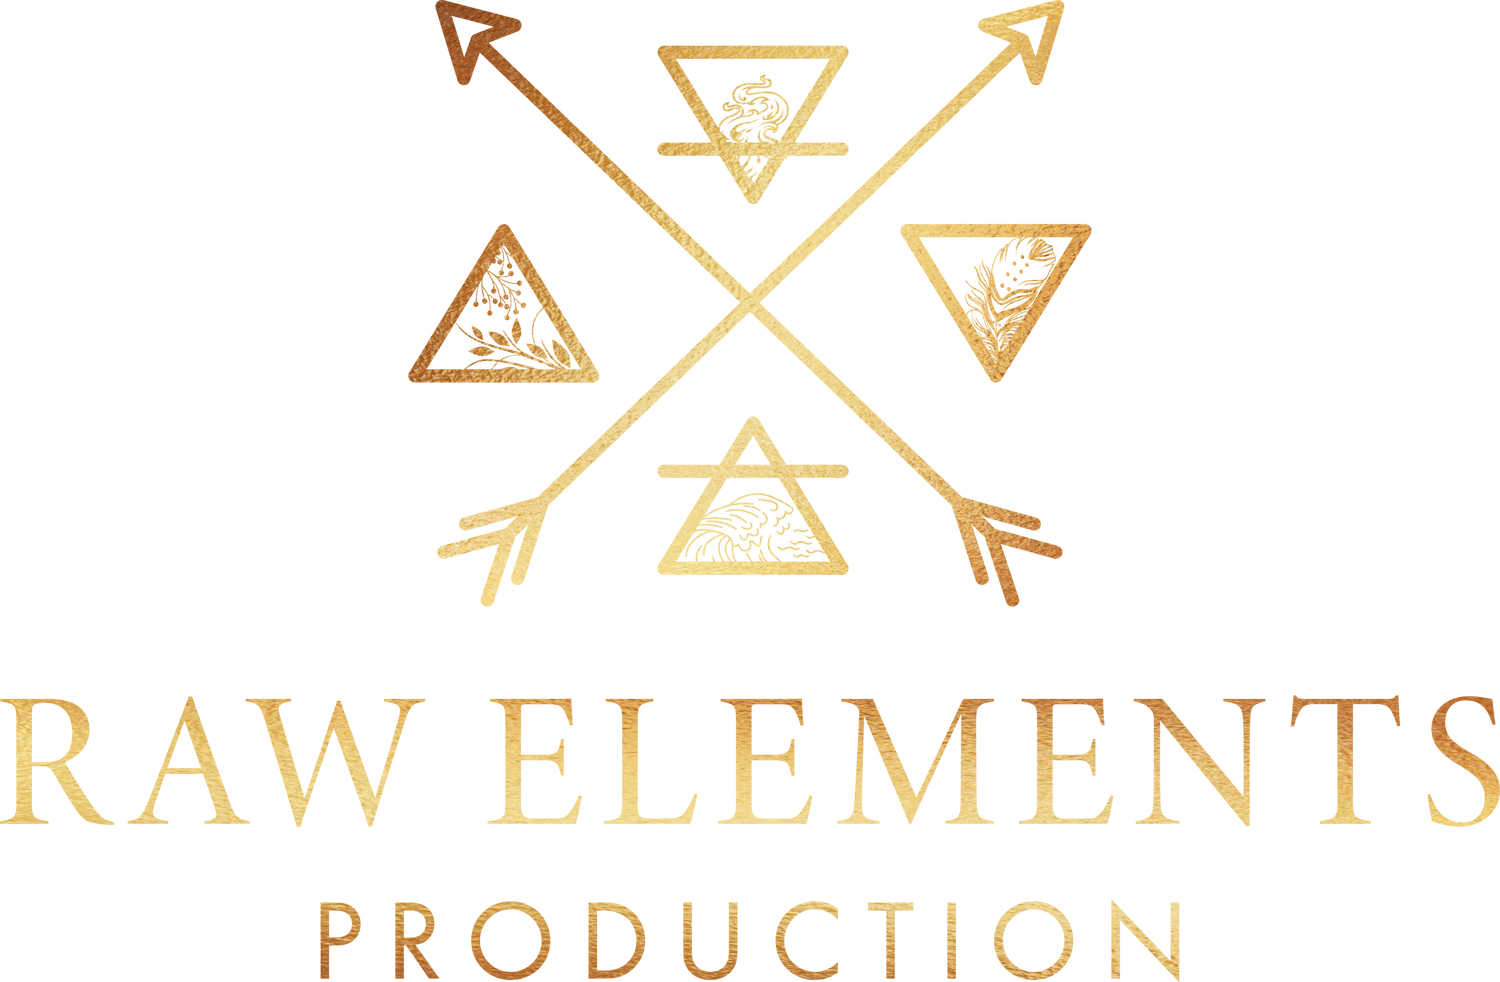 Raw Elements Production